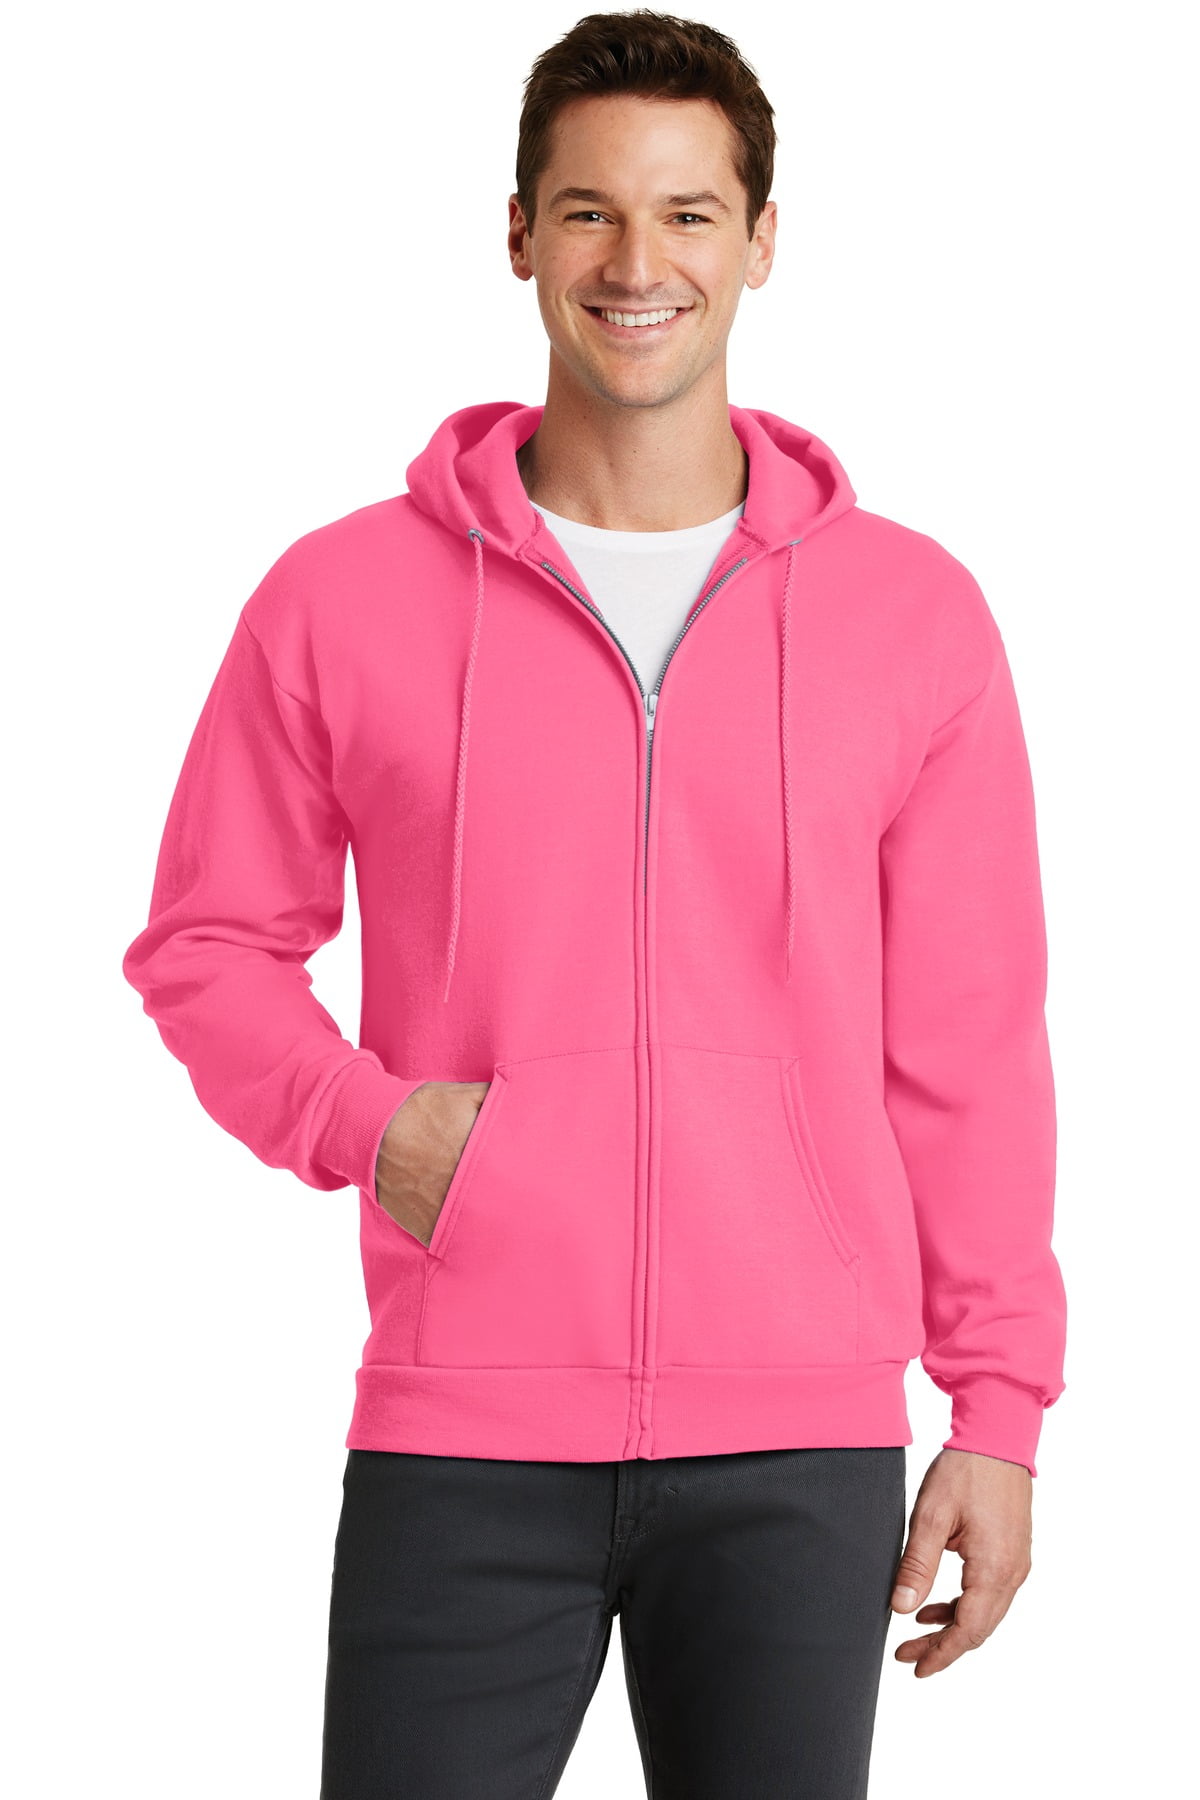 USA zip up hoodie/ pink brand hoodie - clothing & accessories - by